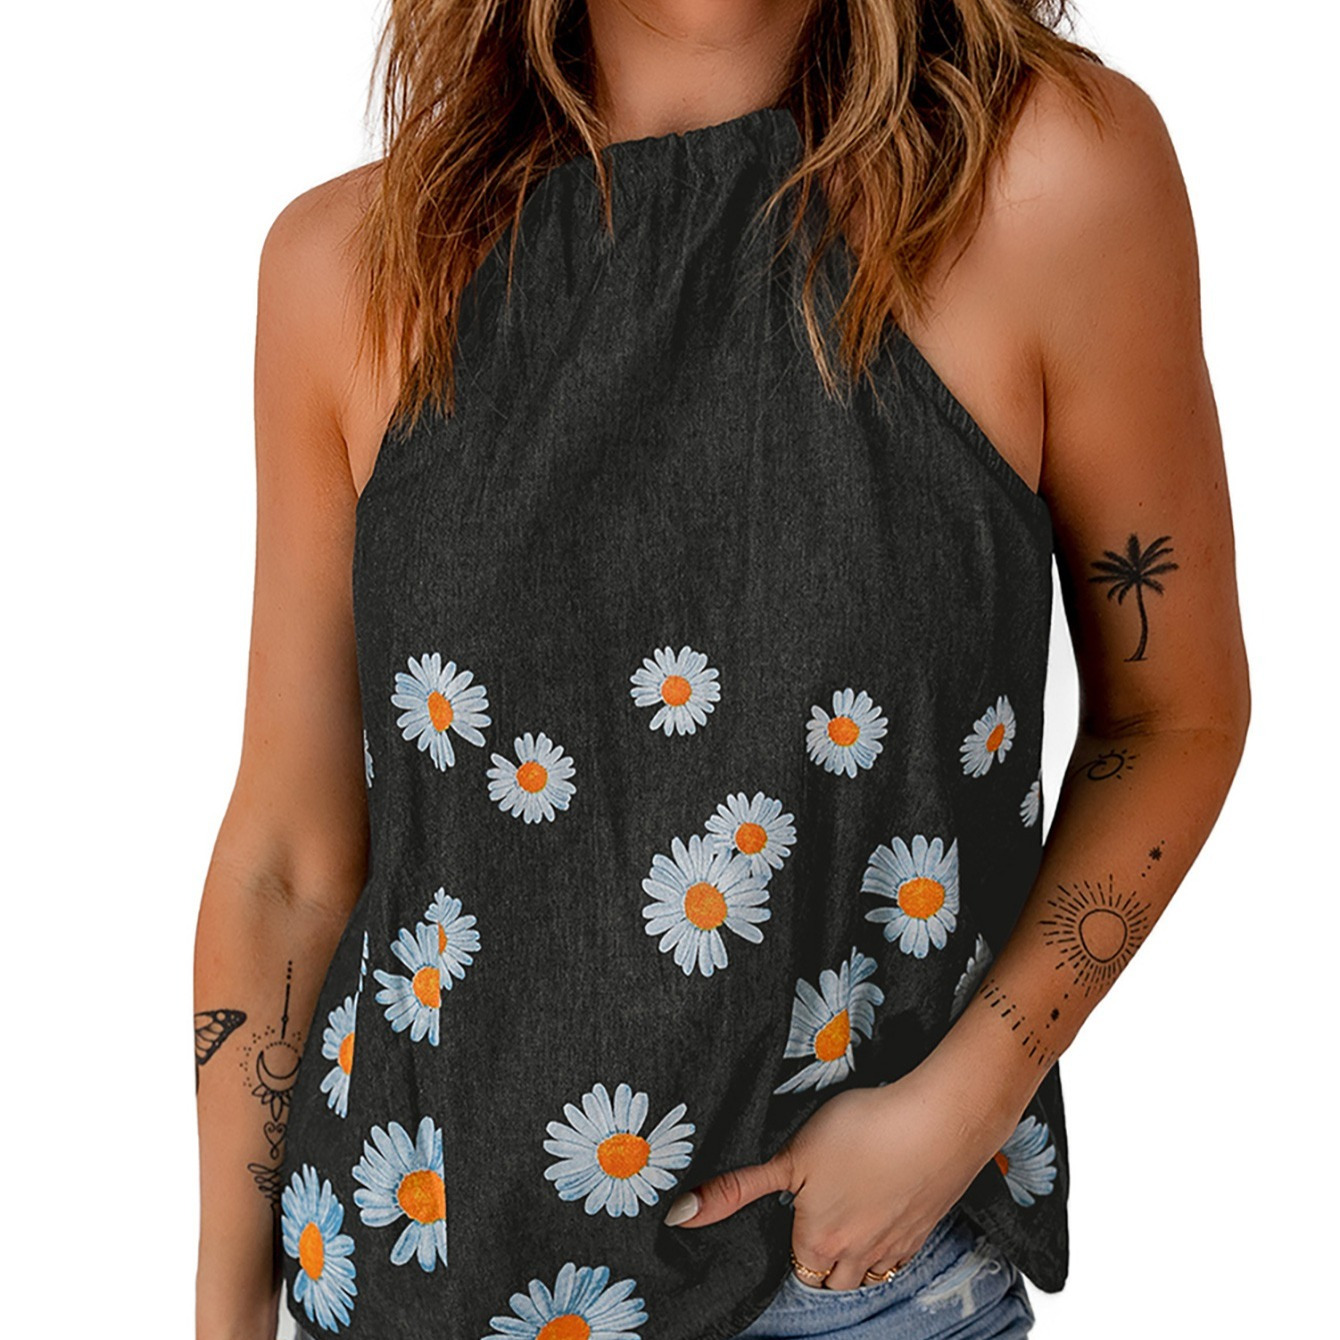 JGGSPWM Women Daisy Sunflower Pint Tank Tops Sleeveless Shirts Halter Neck  Tees Ruffle Flowy Vest Summer Casual Tops Loose Fit Comfy Tshirts Black S 